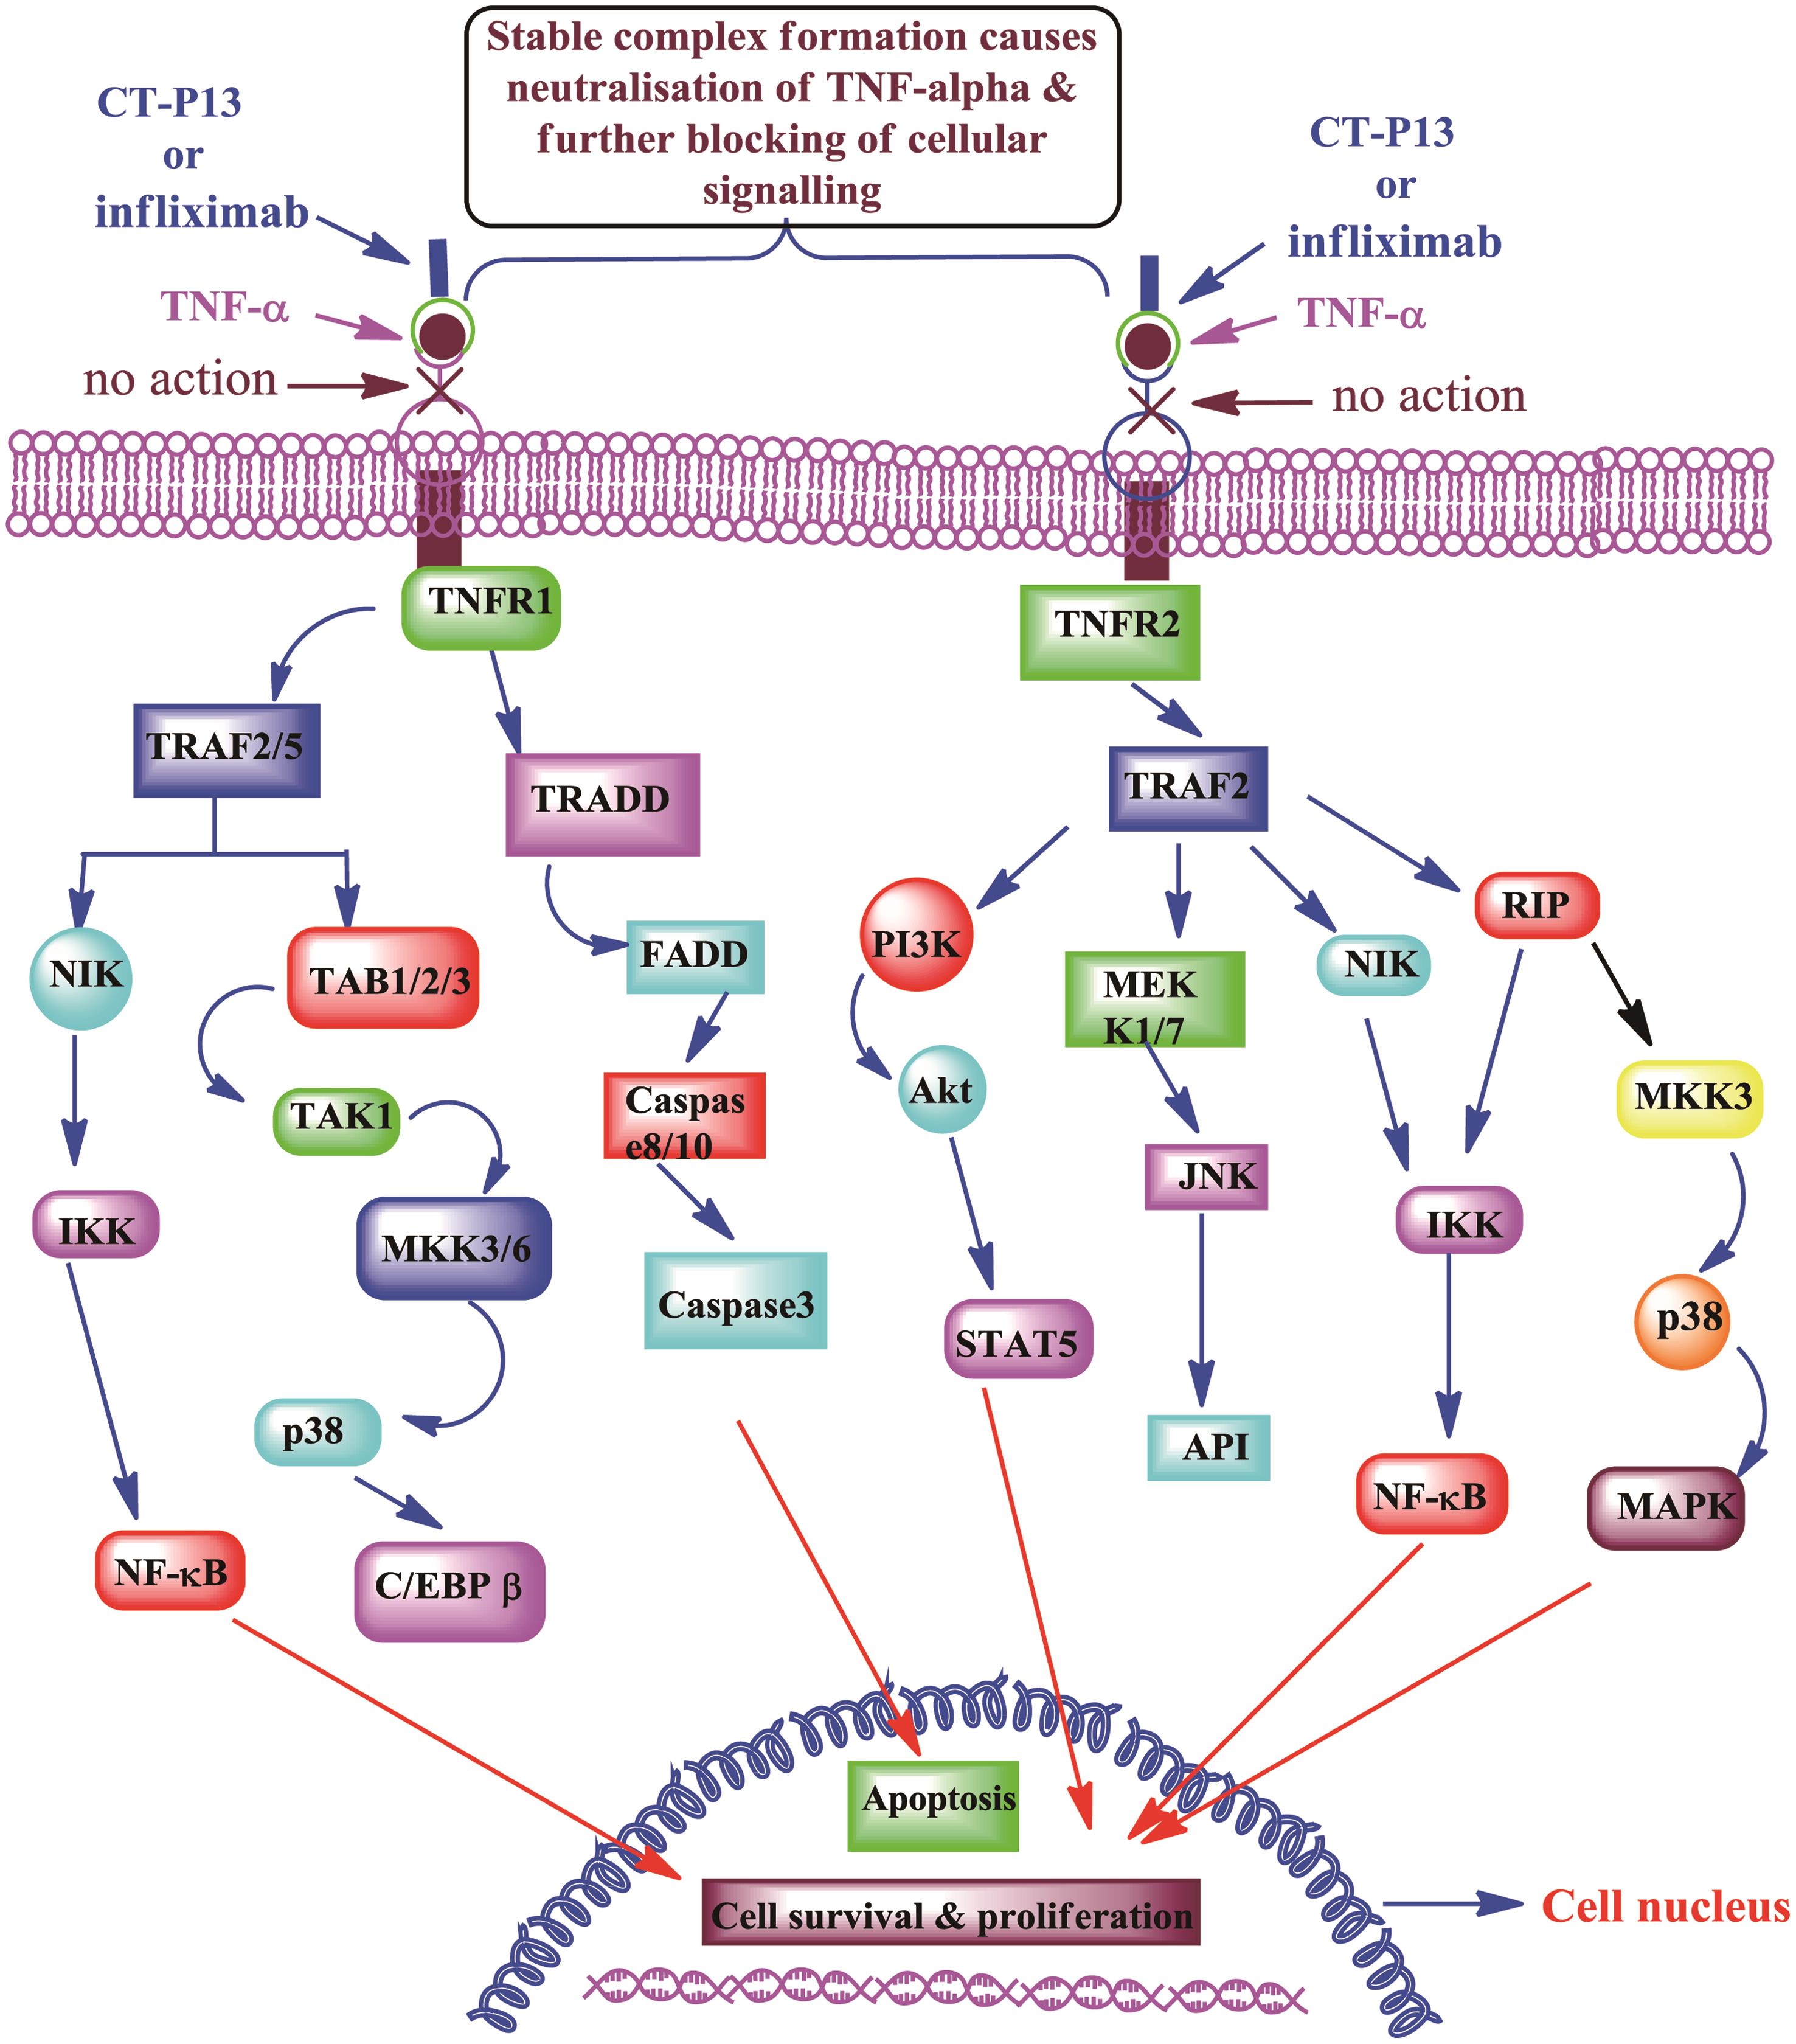 Molecular mechanism of action of infliximab and infliximab biosimilar (CT-P13).